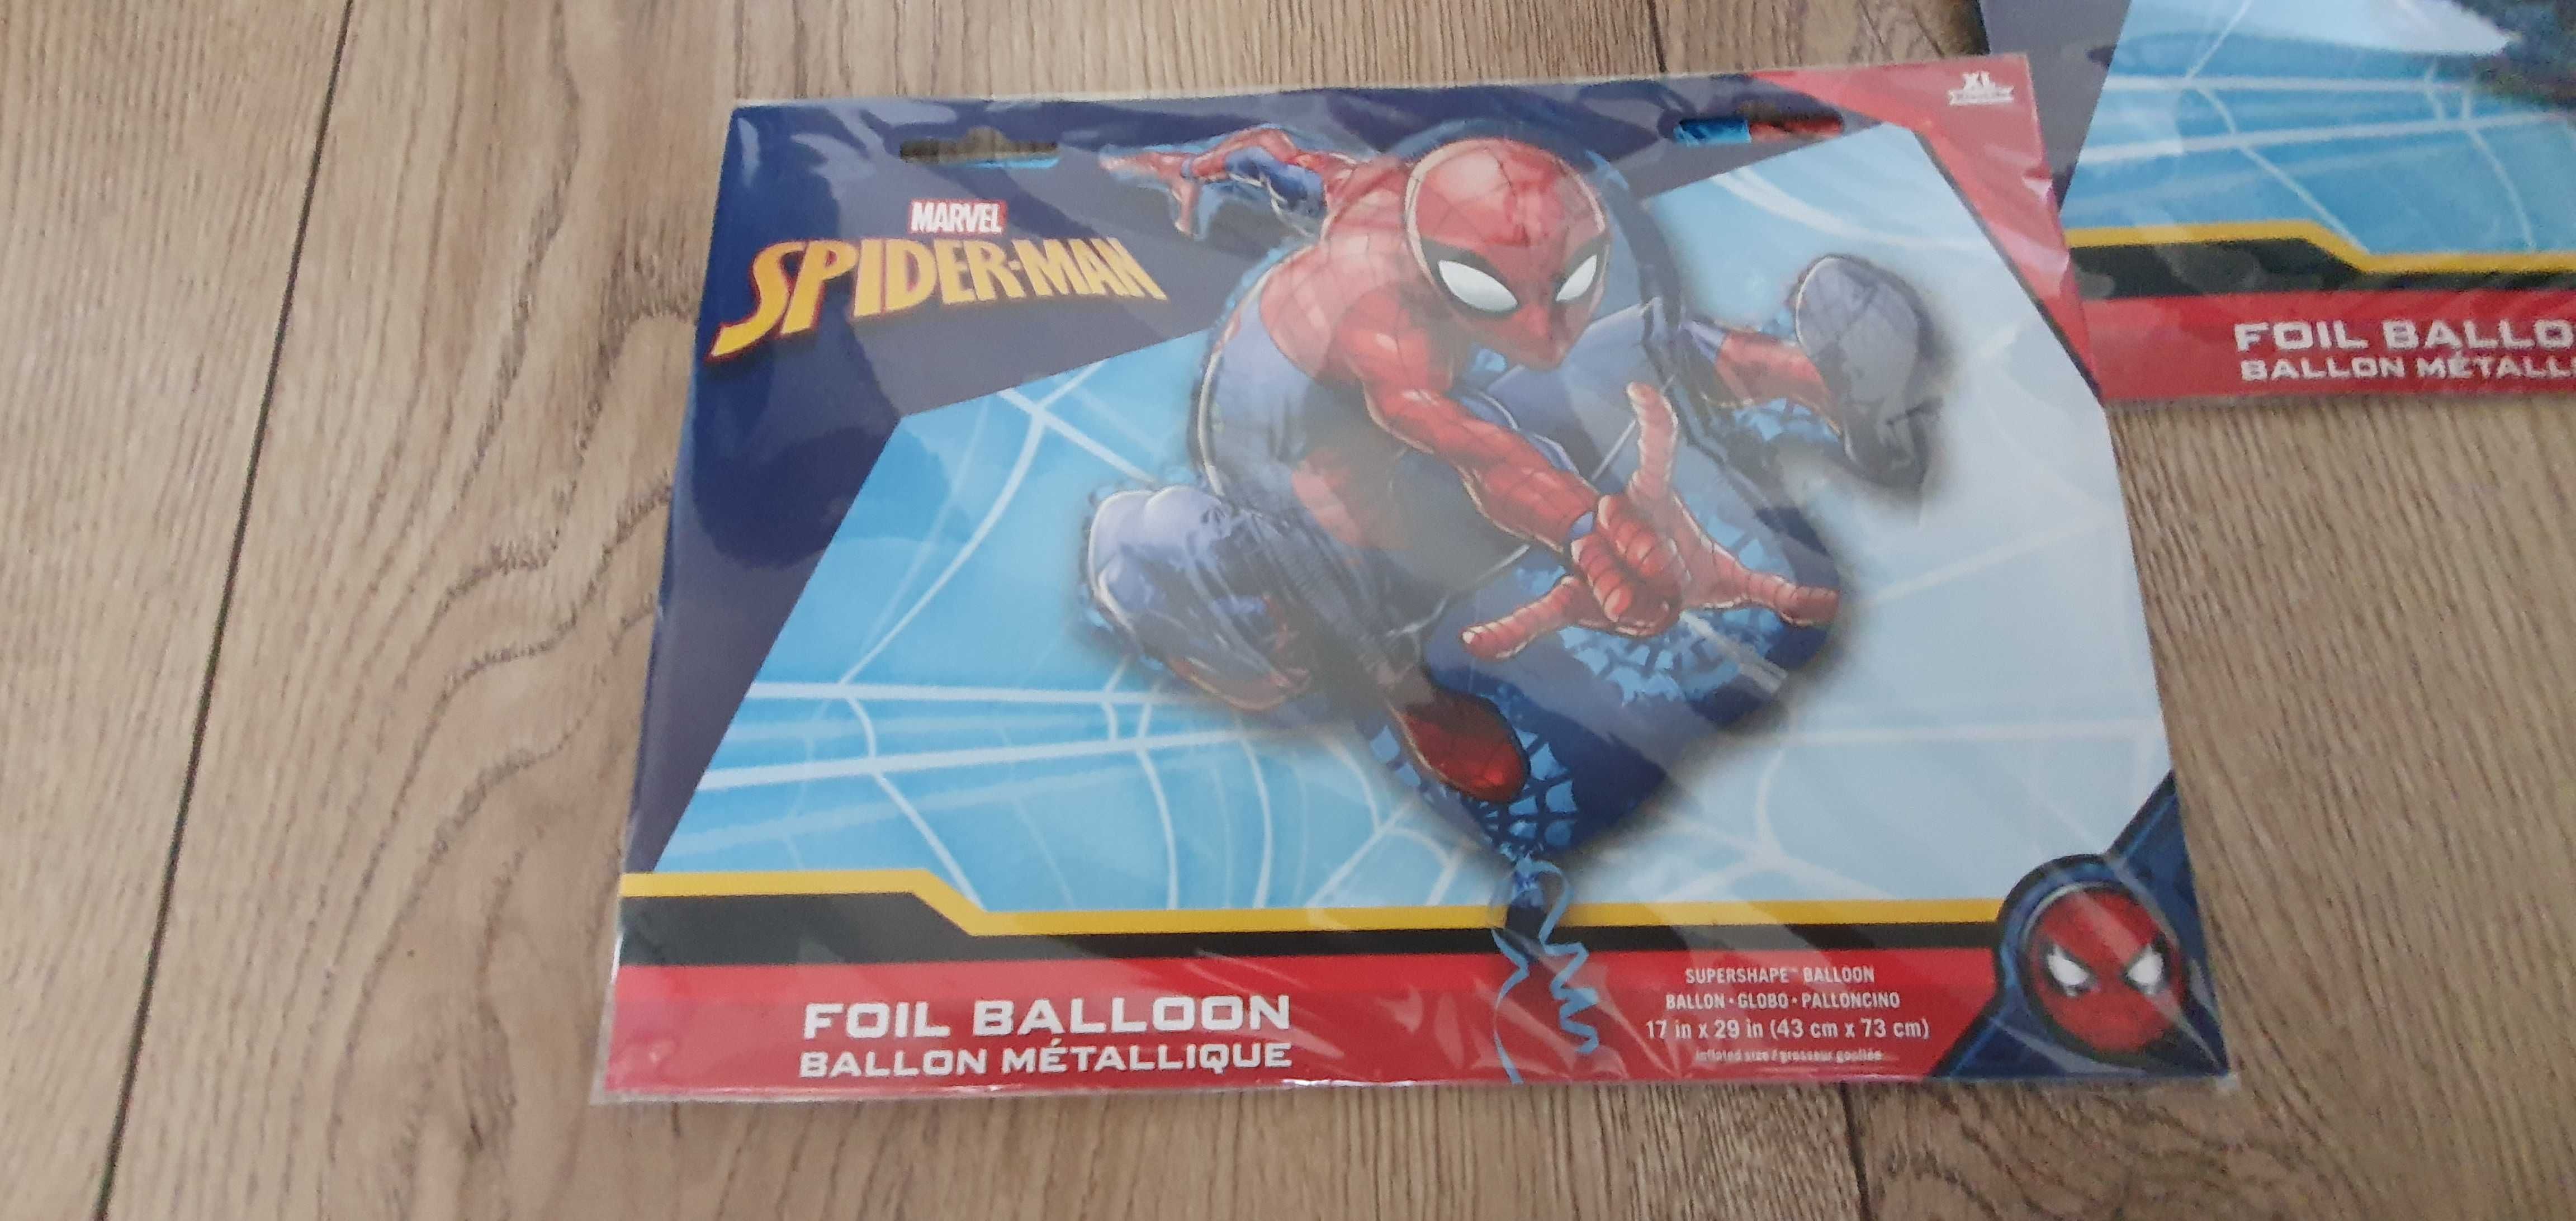 Balony Spiderman 43x73